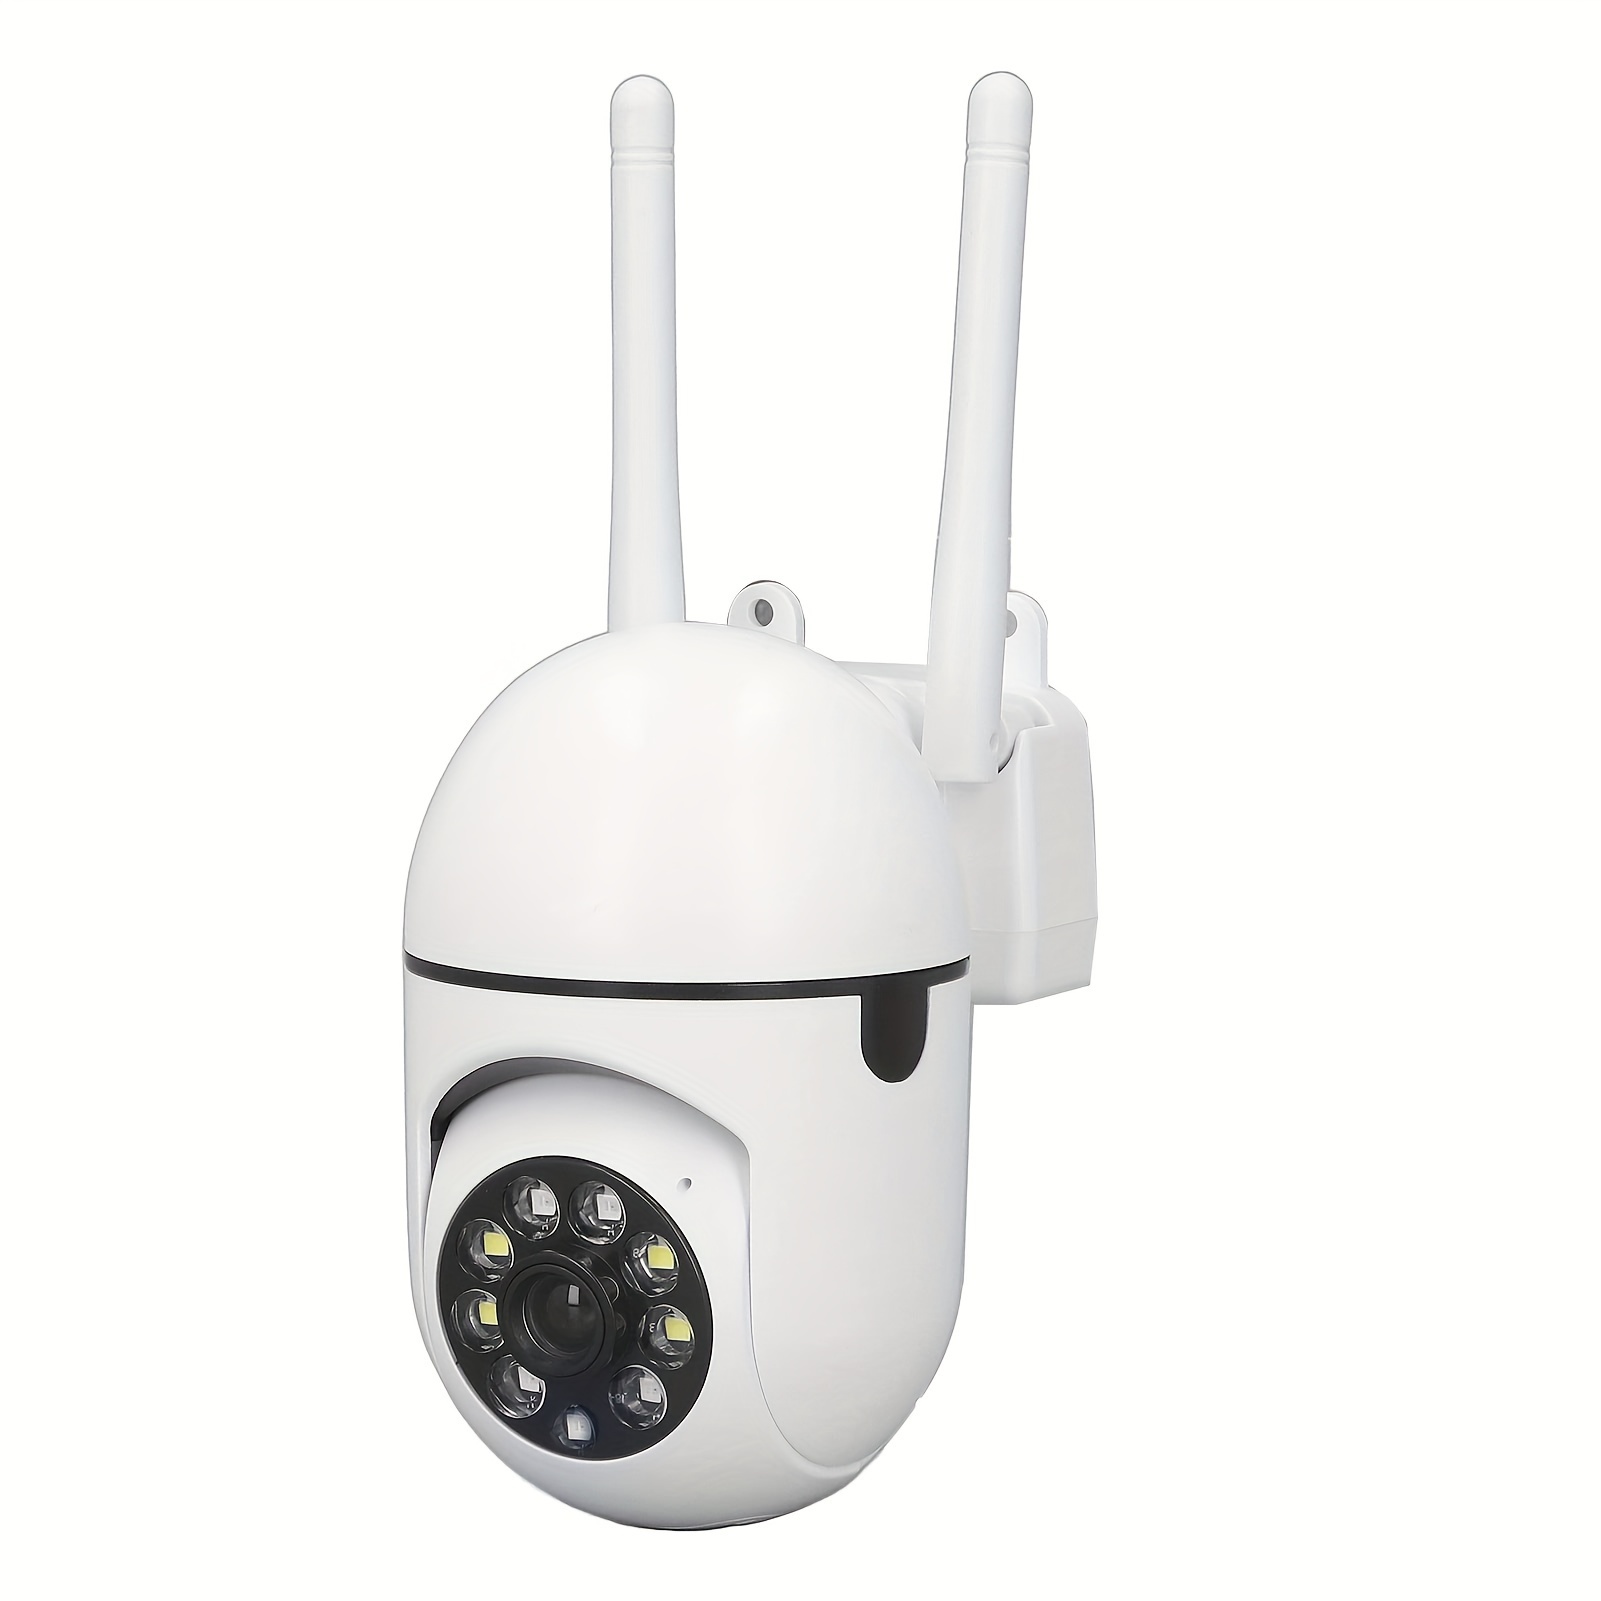 Coastal Surveillance Defog Outdoor Security Cameras RJ45 Long